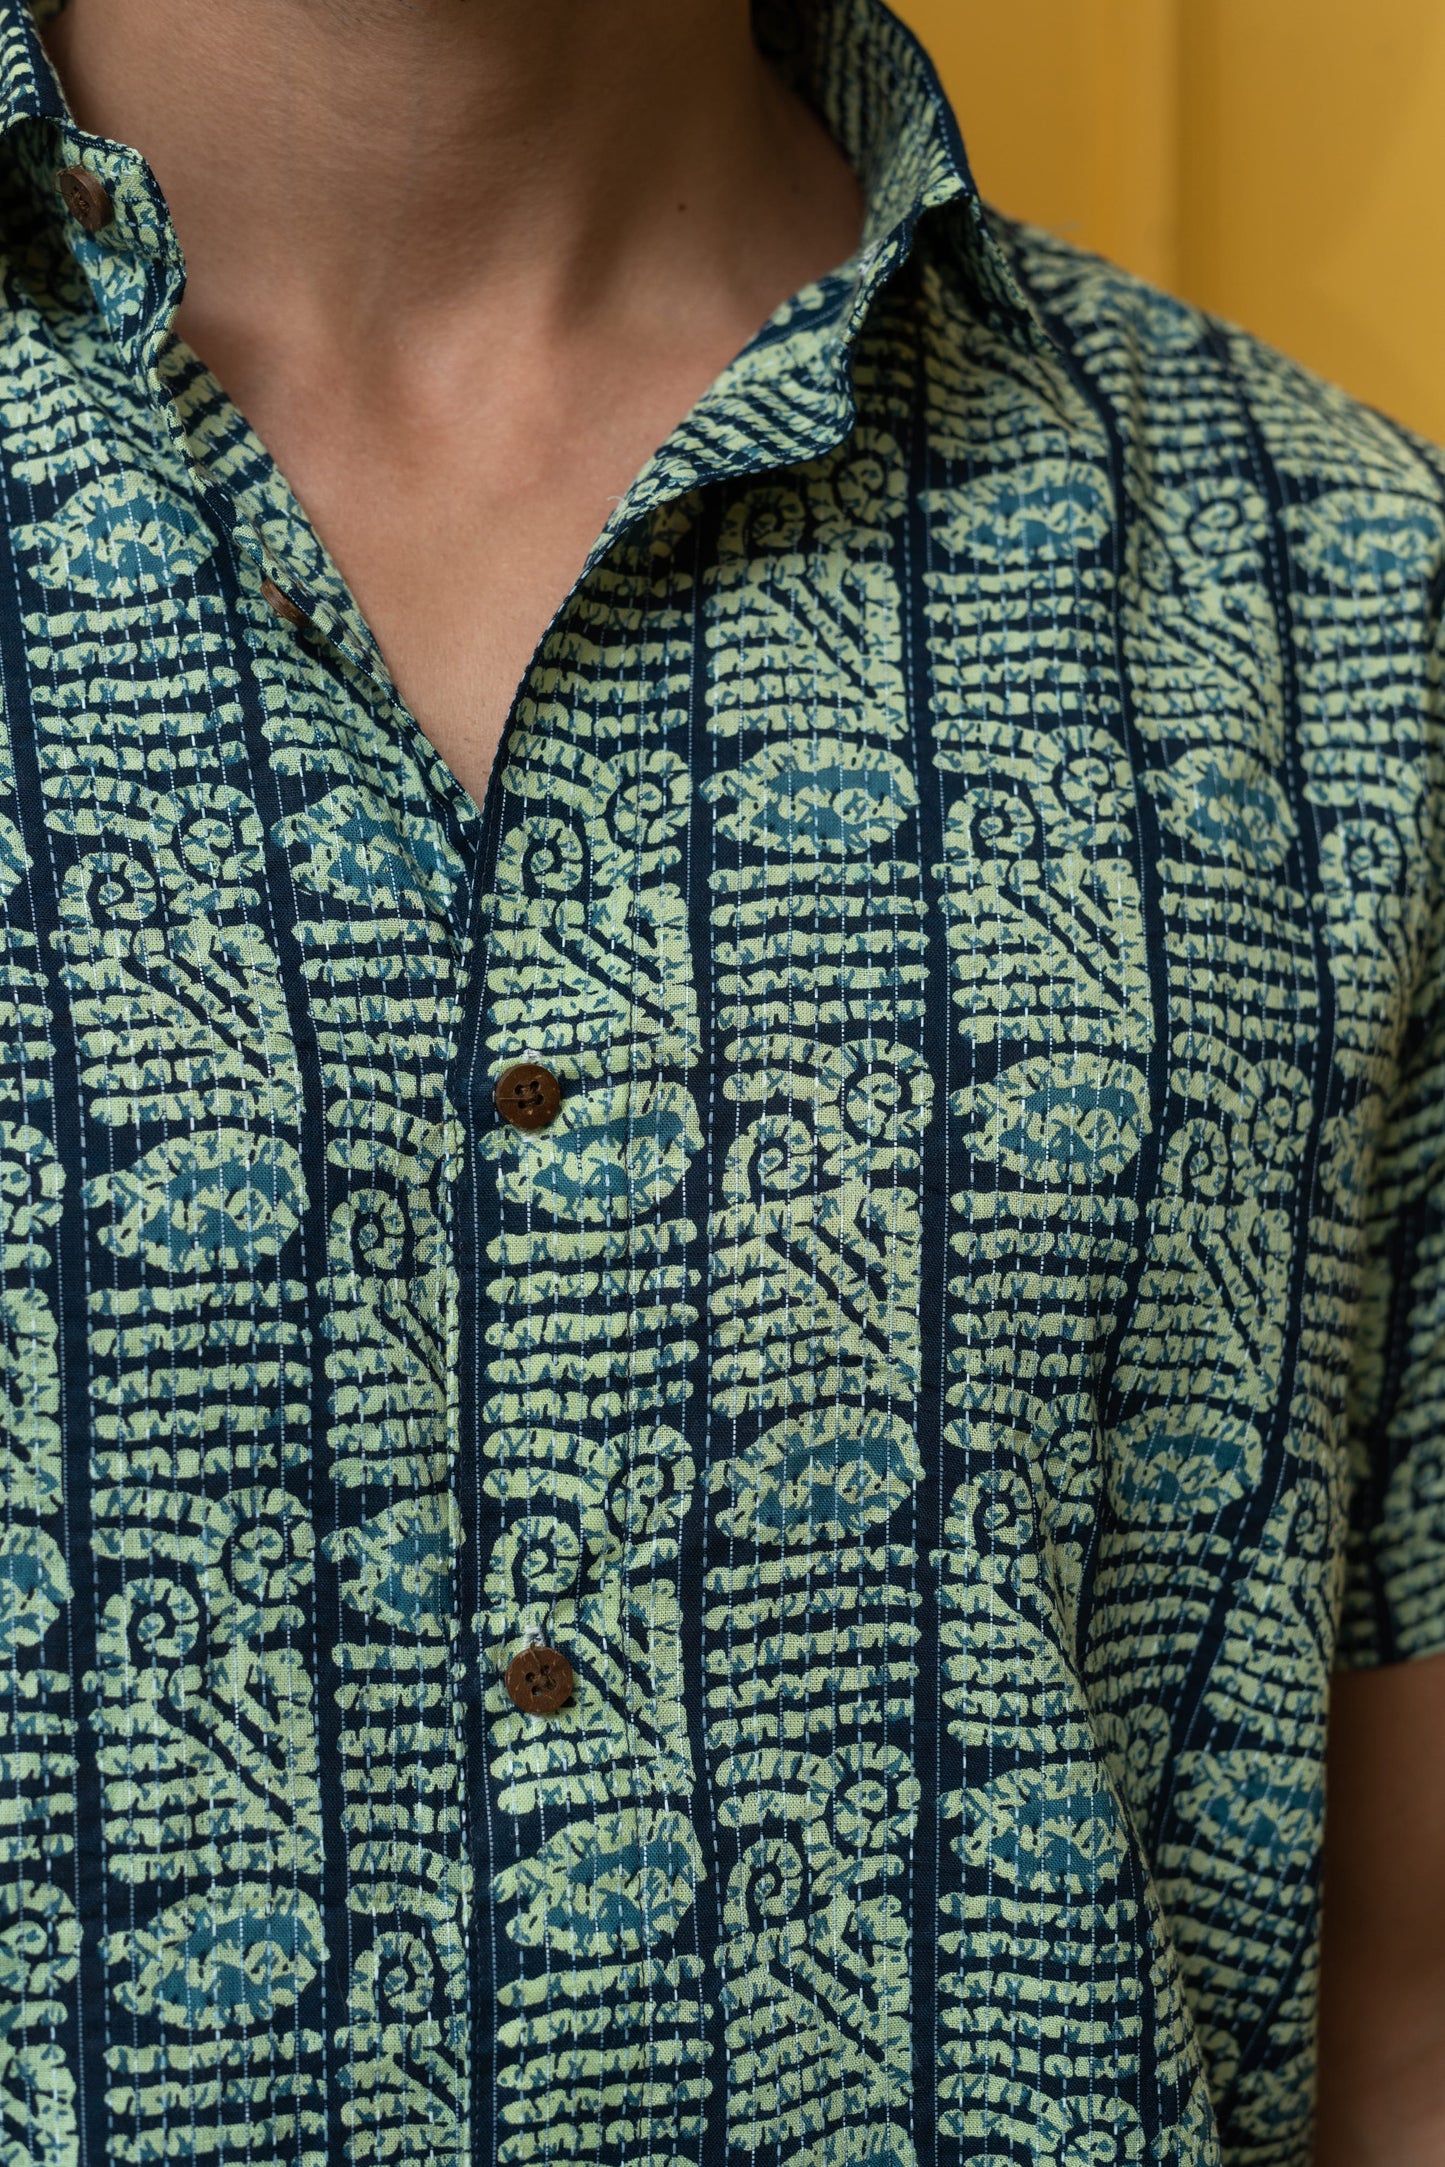 The English Green And Blue Tribal Print Kantha Work Half Sleeves Shirt